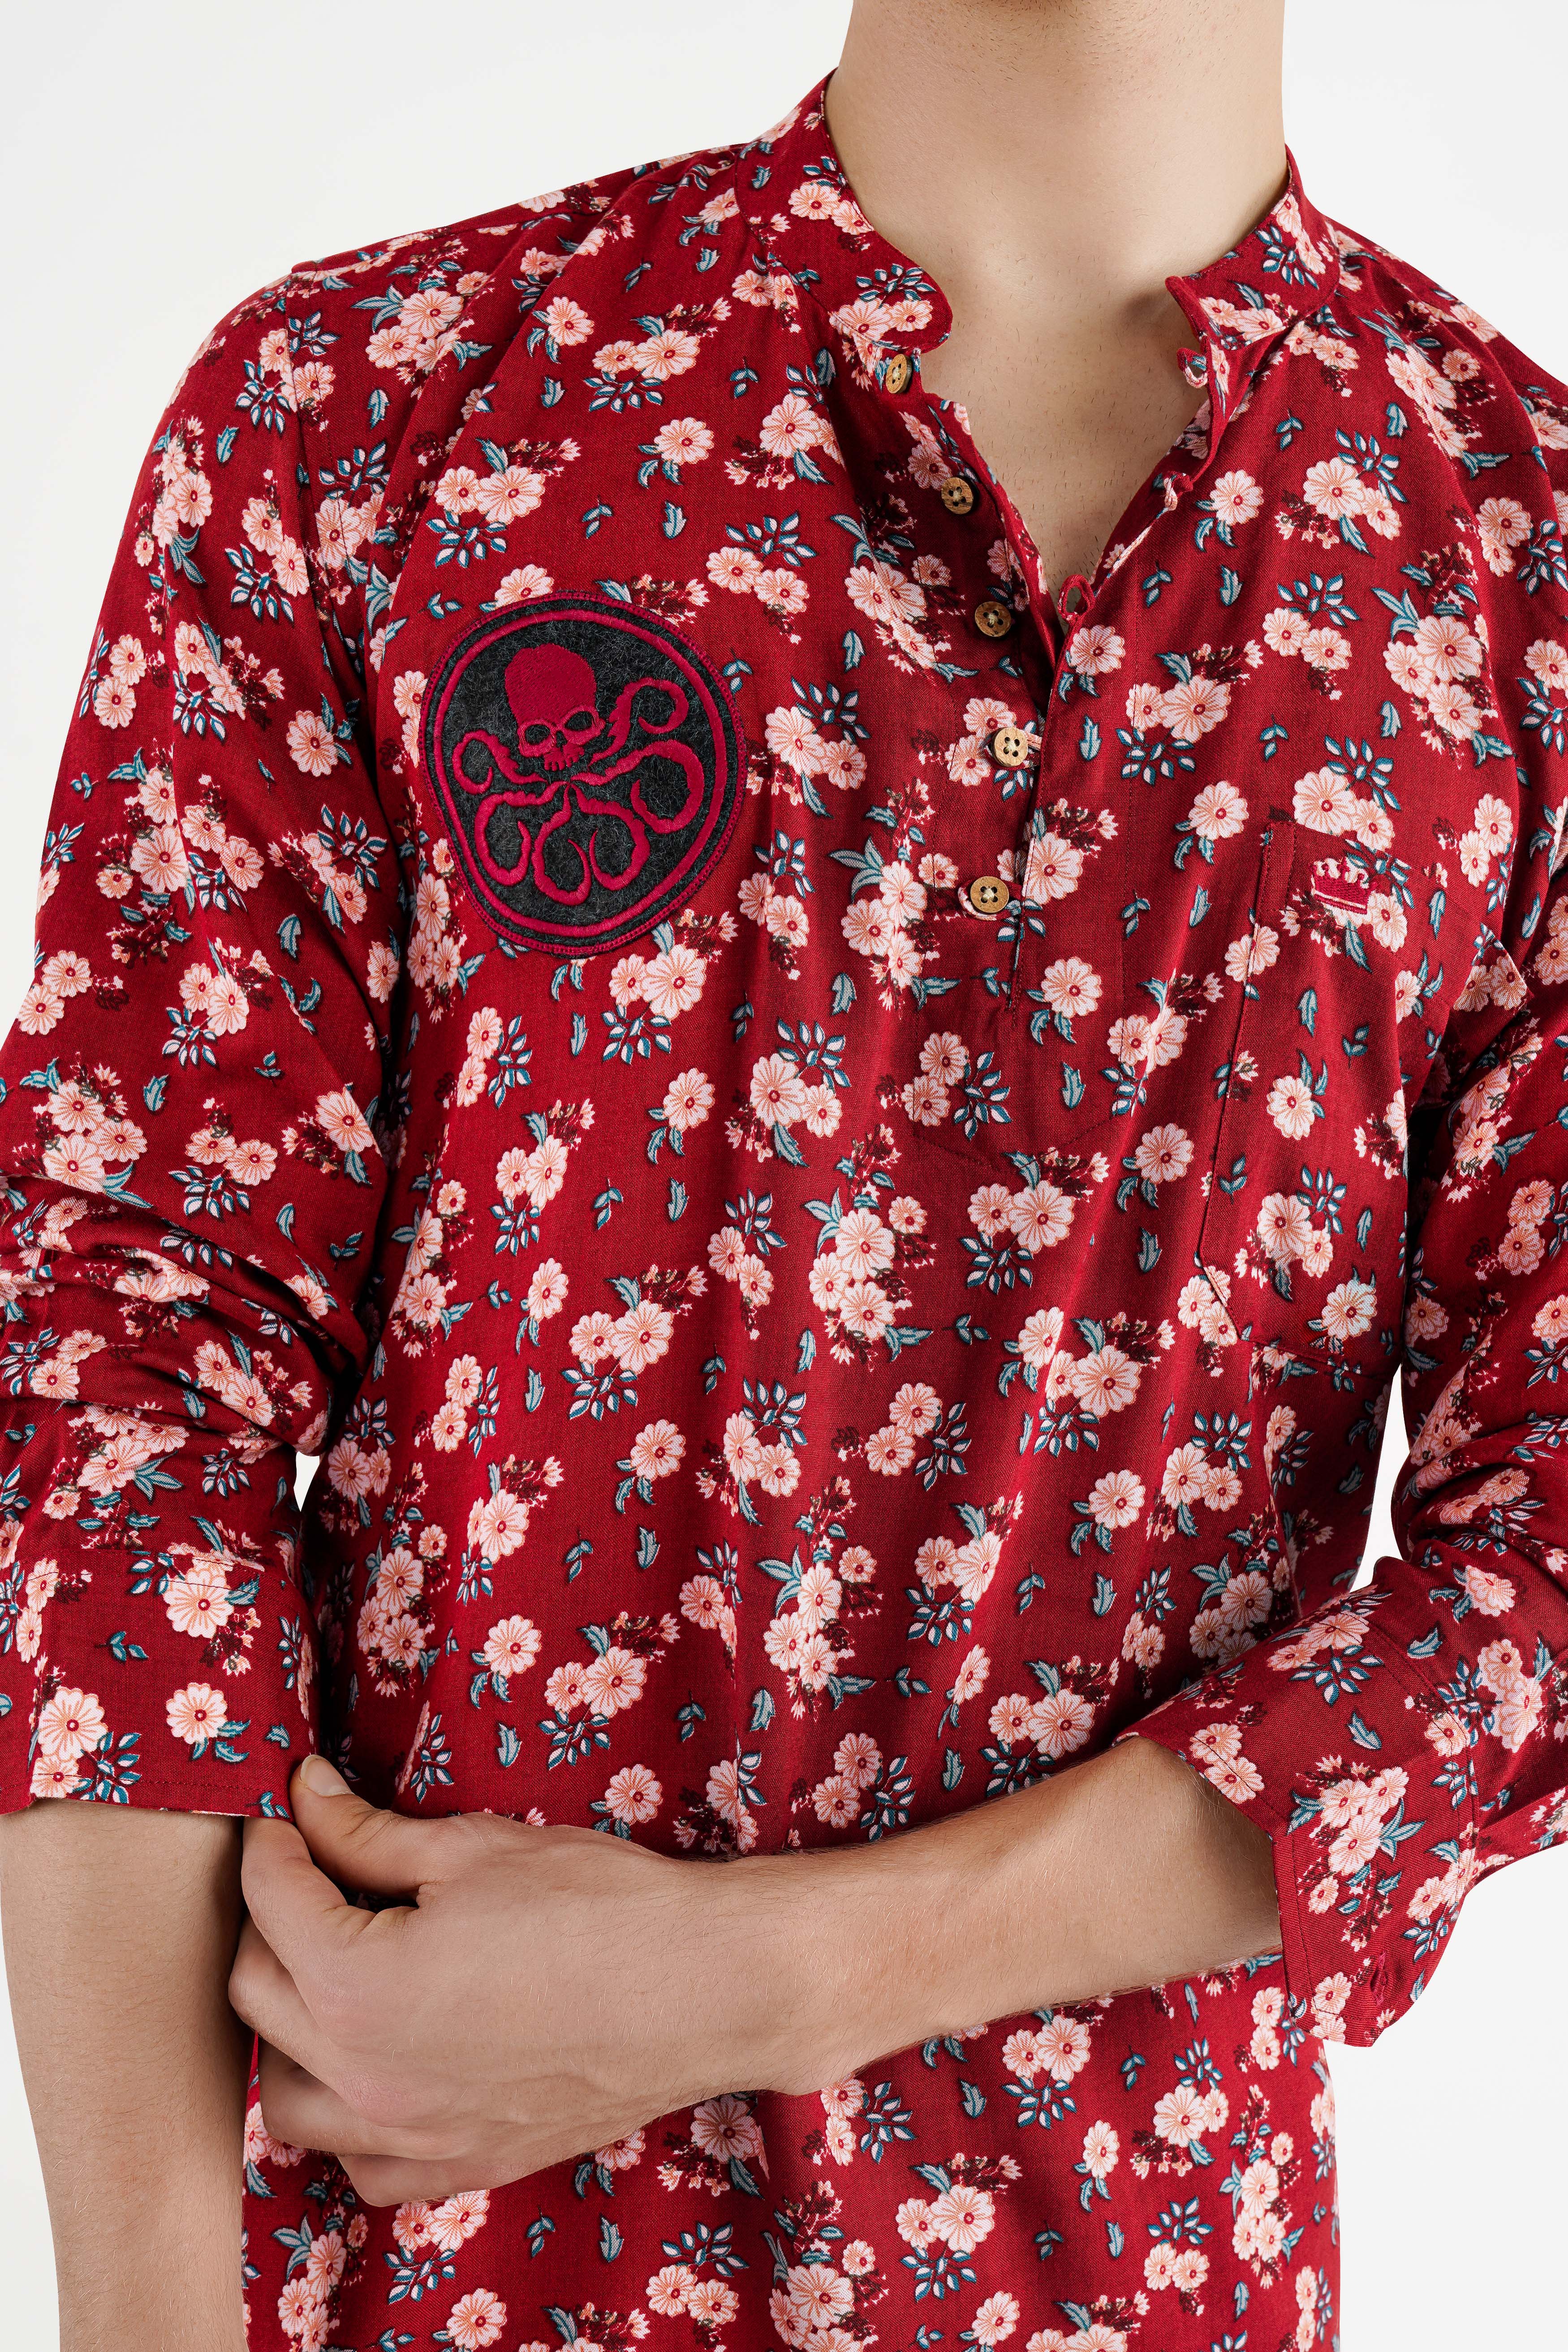 Merlot Red Floral Printed with Funky Patchwork Premium Tencel Designer Kurta Shirt